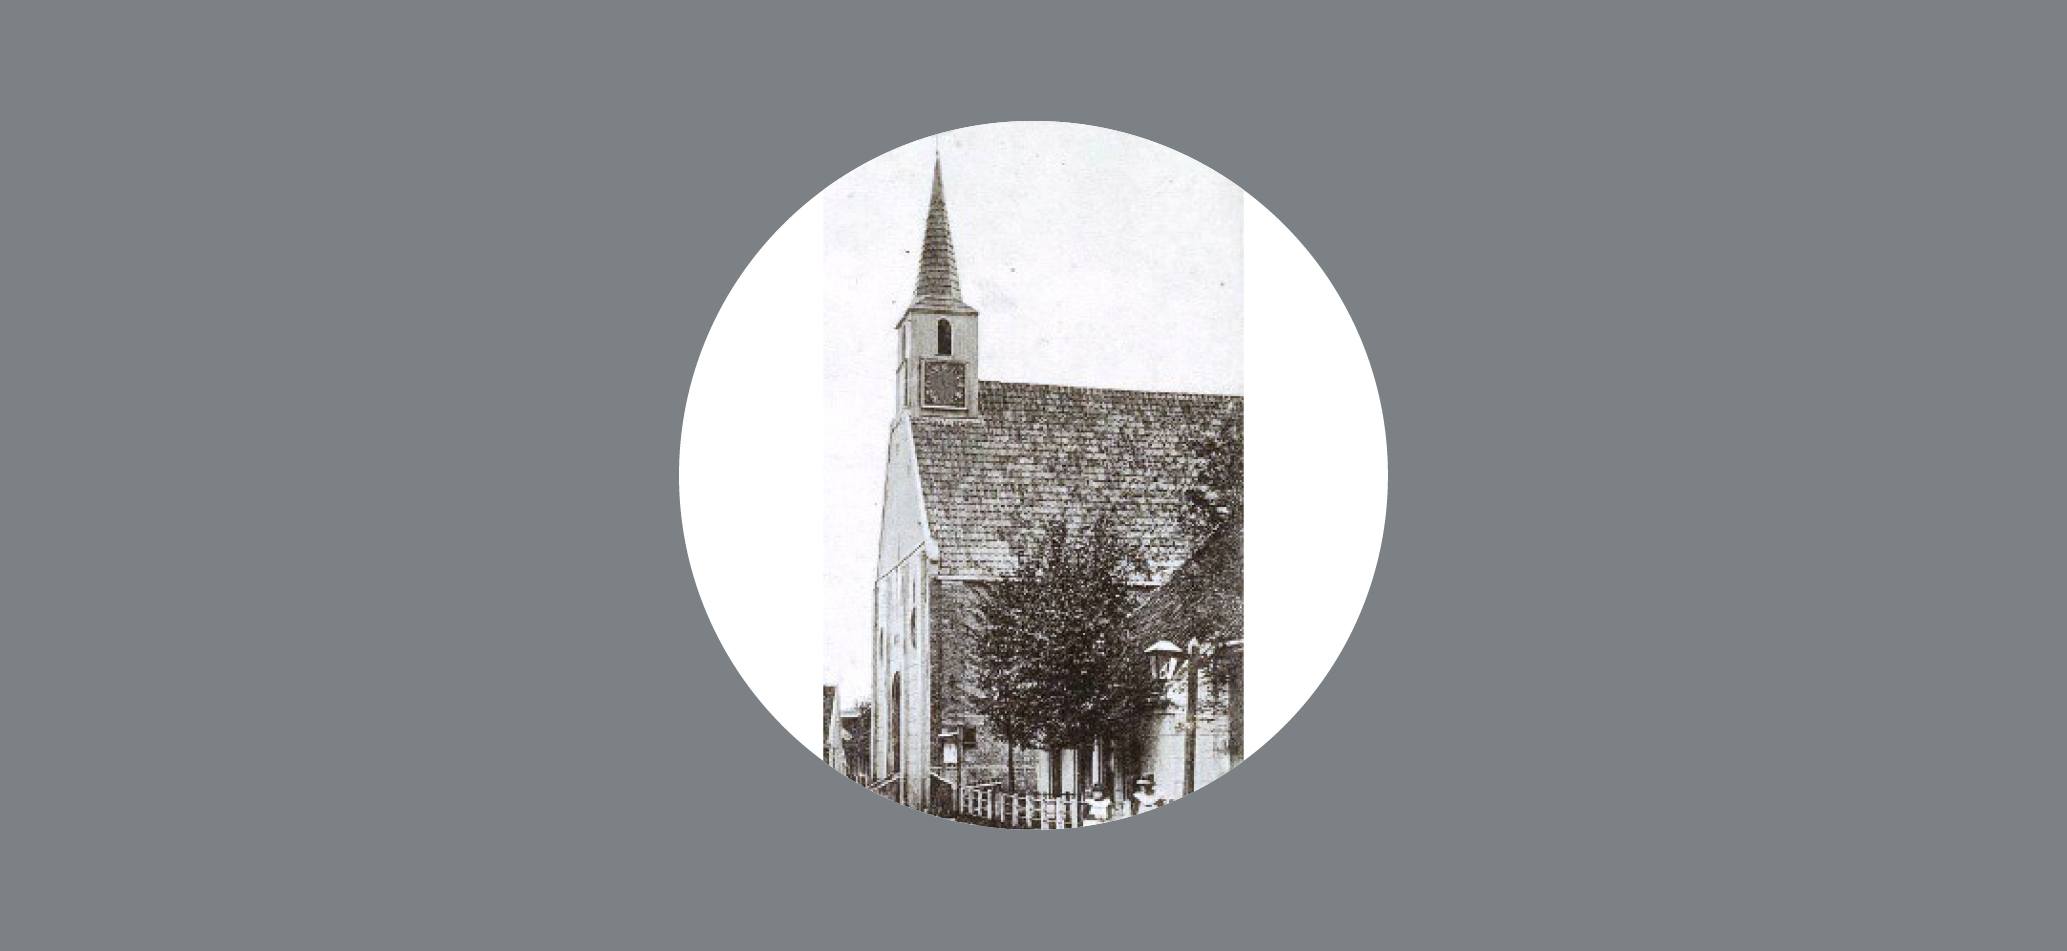 Driehuizen_N.H.Kerk_1648-1912-Beeldbank_Alkmaar